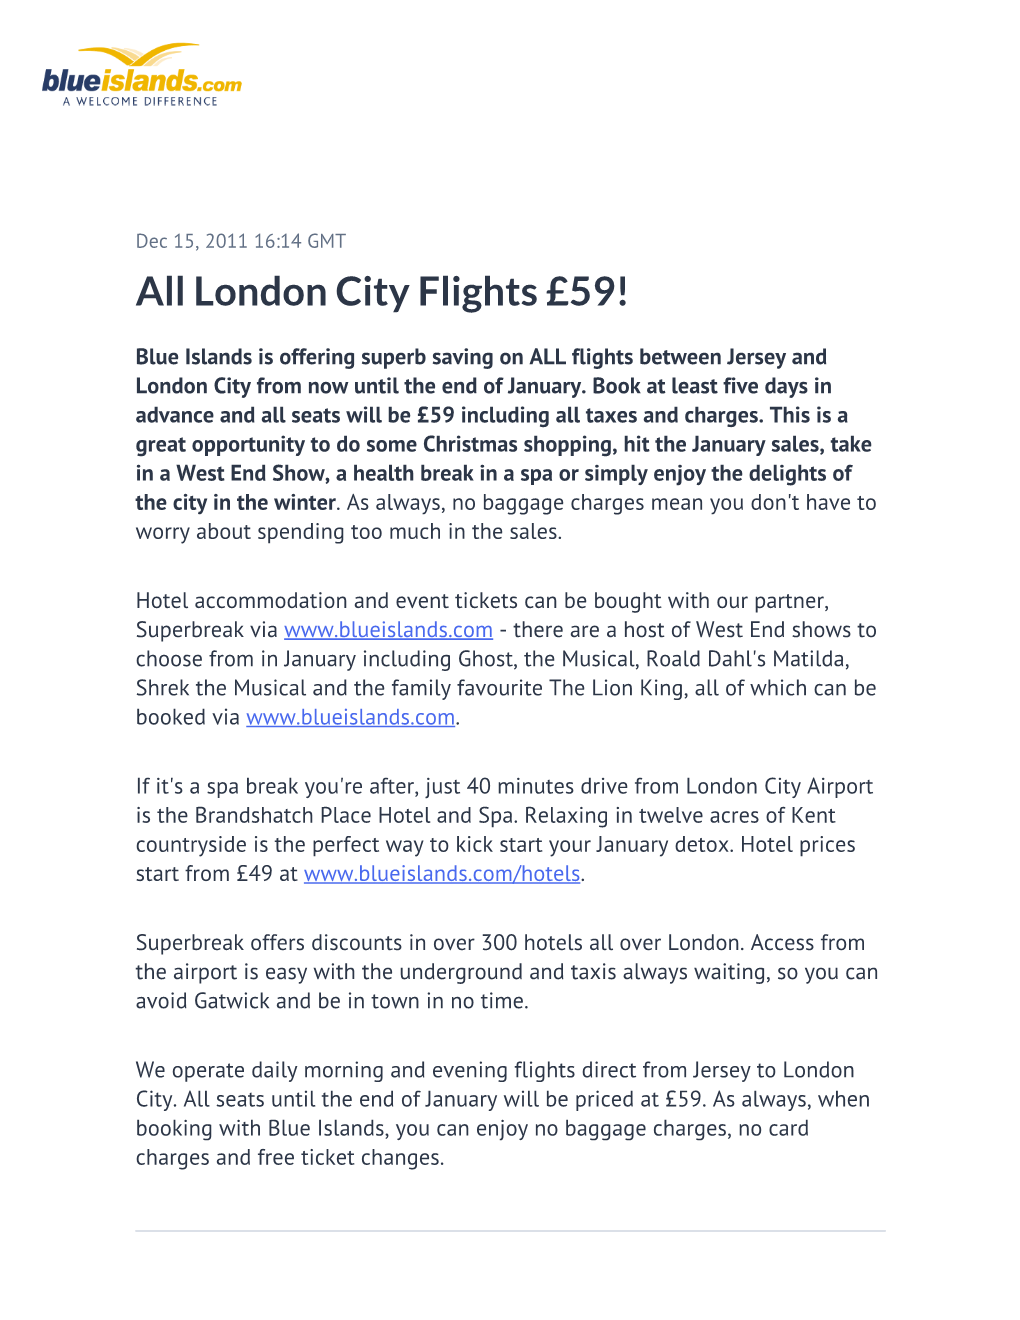 London City Flights £59!